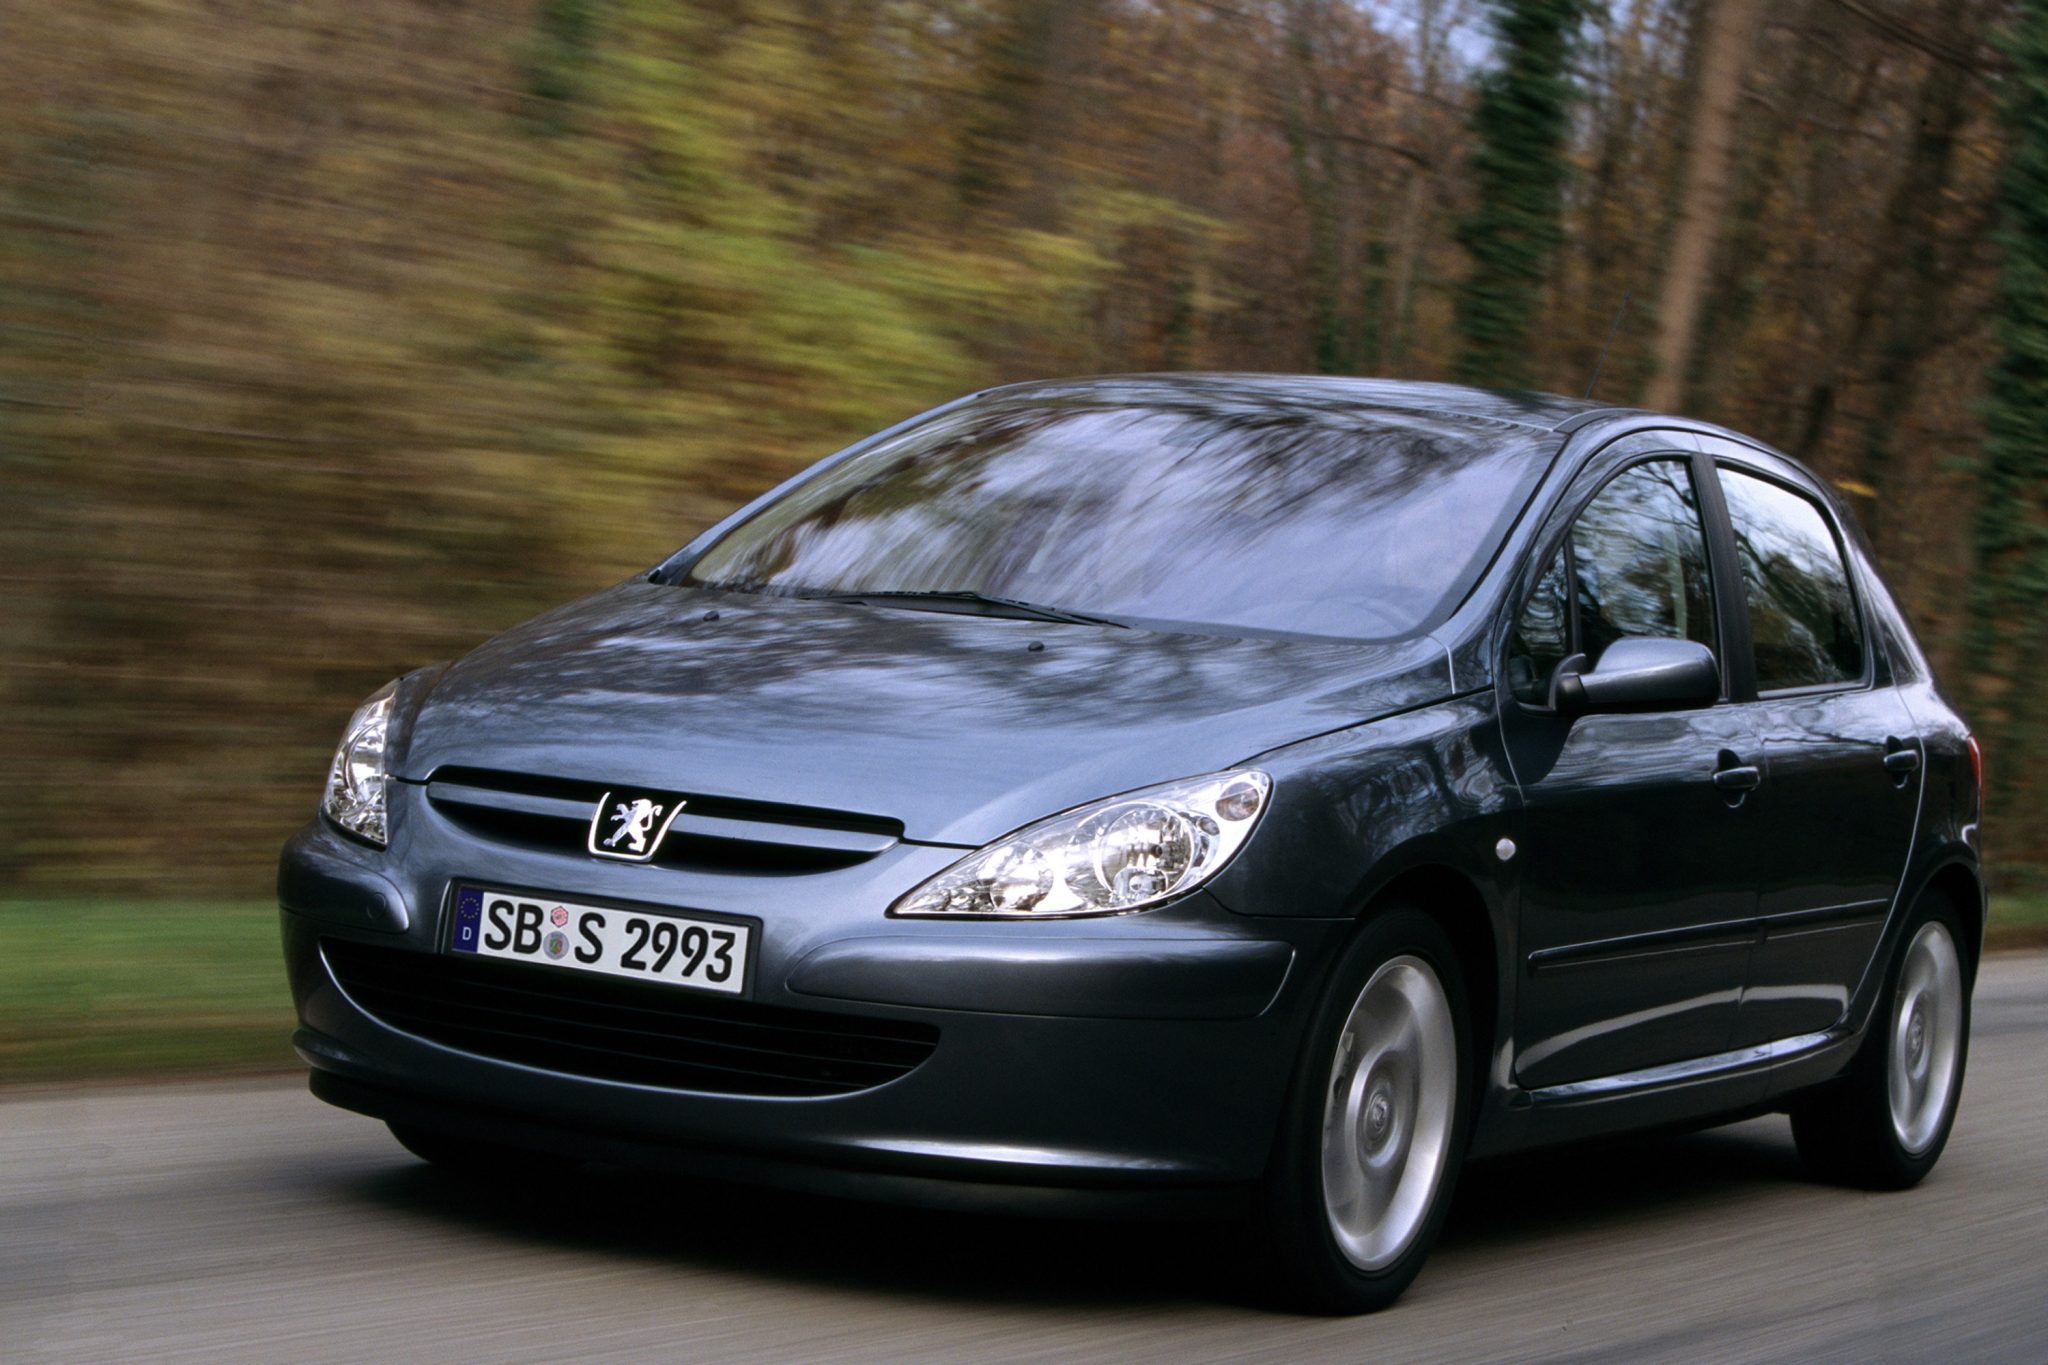 File:Peugeot 307 front 20071217.jpg - Wikimedia Commons